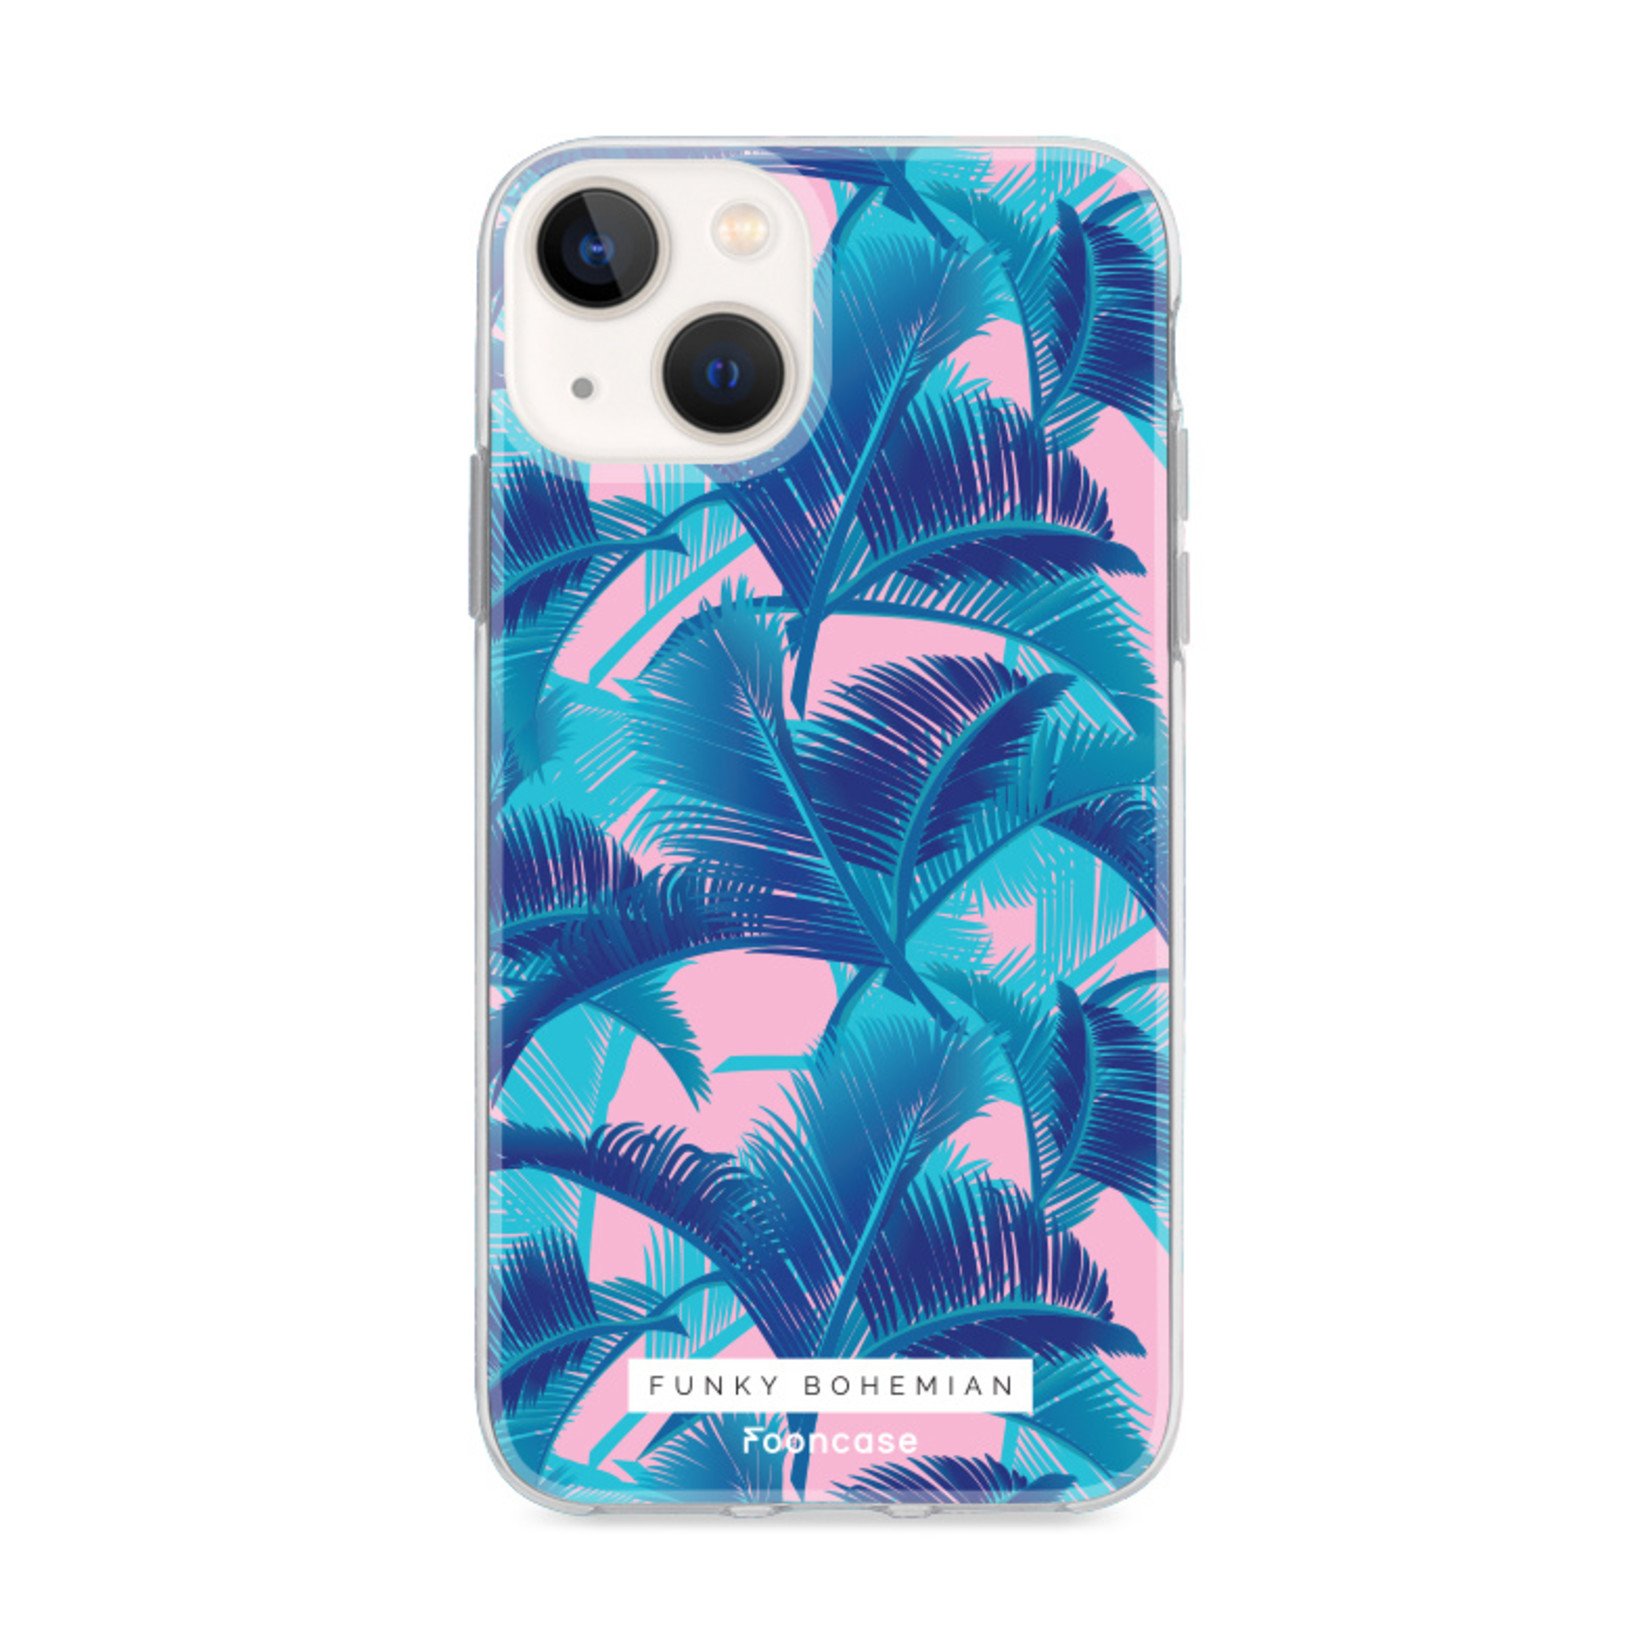 FOONCASE iPhone 13 Mini hoesje TPU Soft Case - Back Cover - Funky Bohemian / Blauw Roze Bladeren